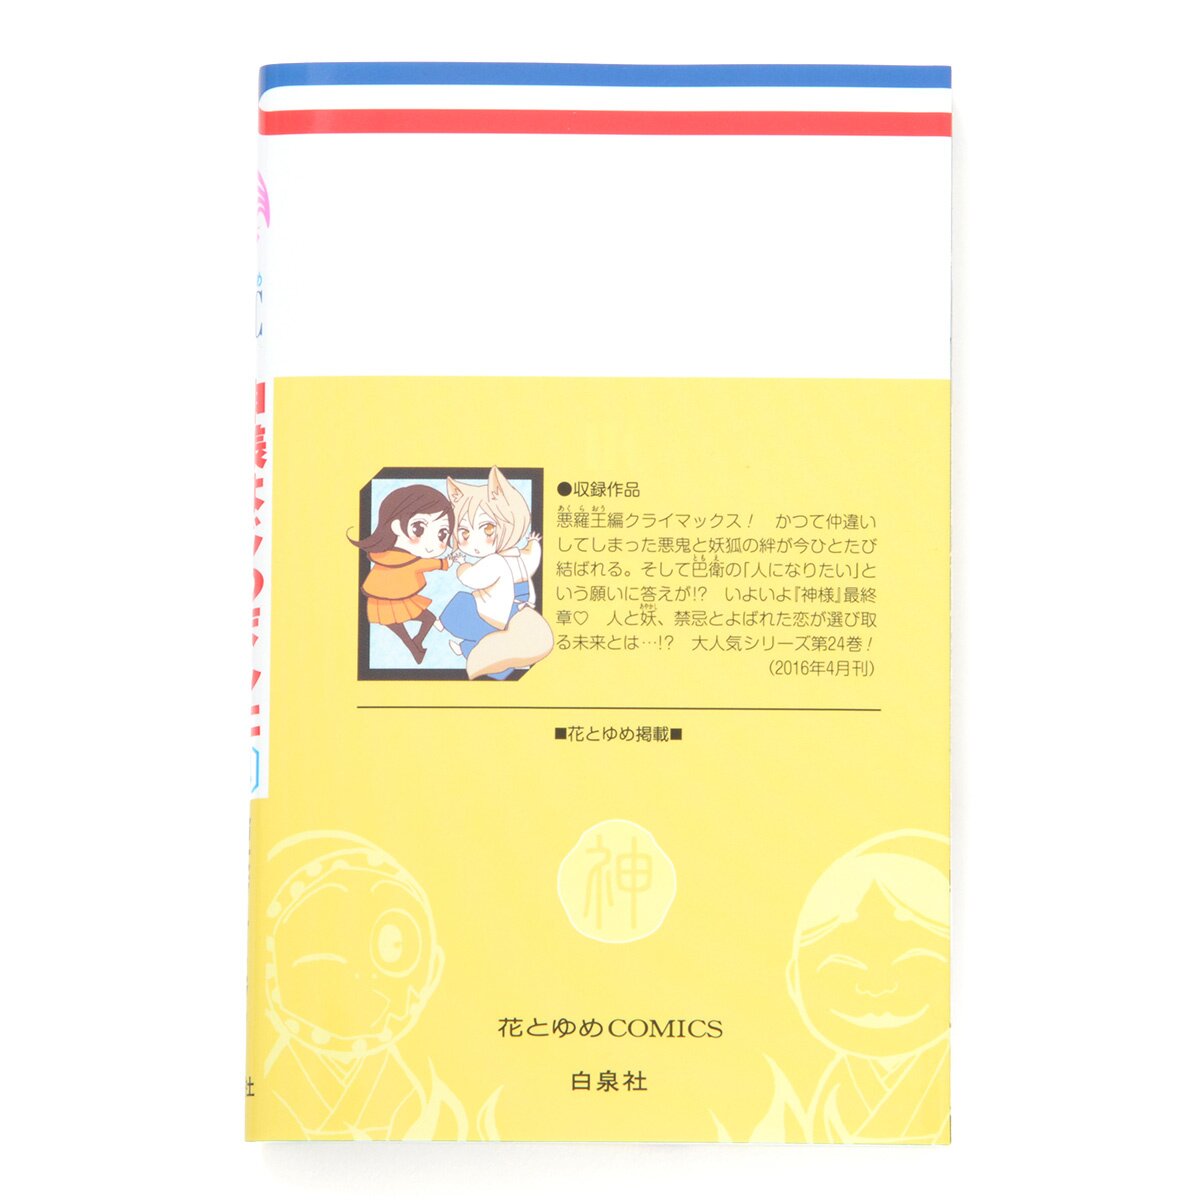 Kamisama Kiss, Vol. 24, Book by Julietta Suzuki, Official Publisher Page